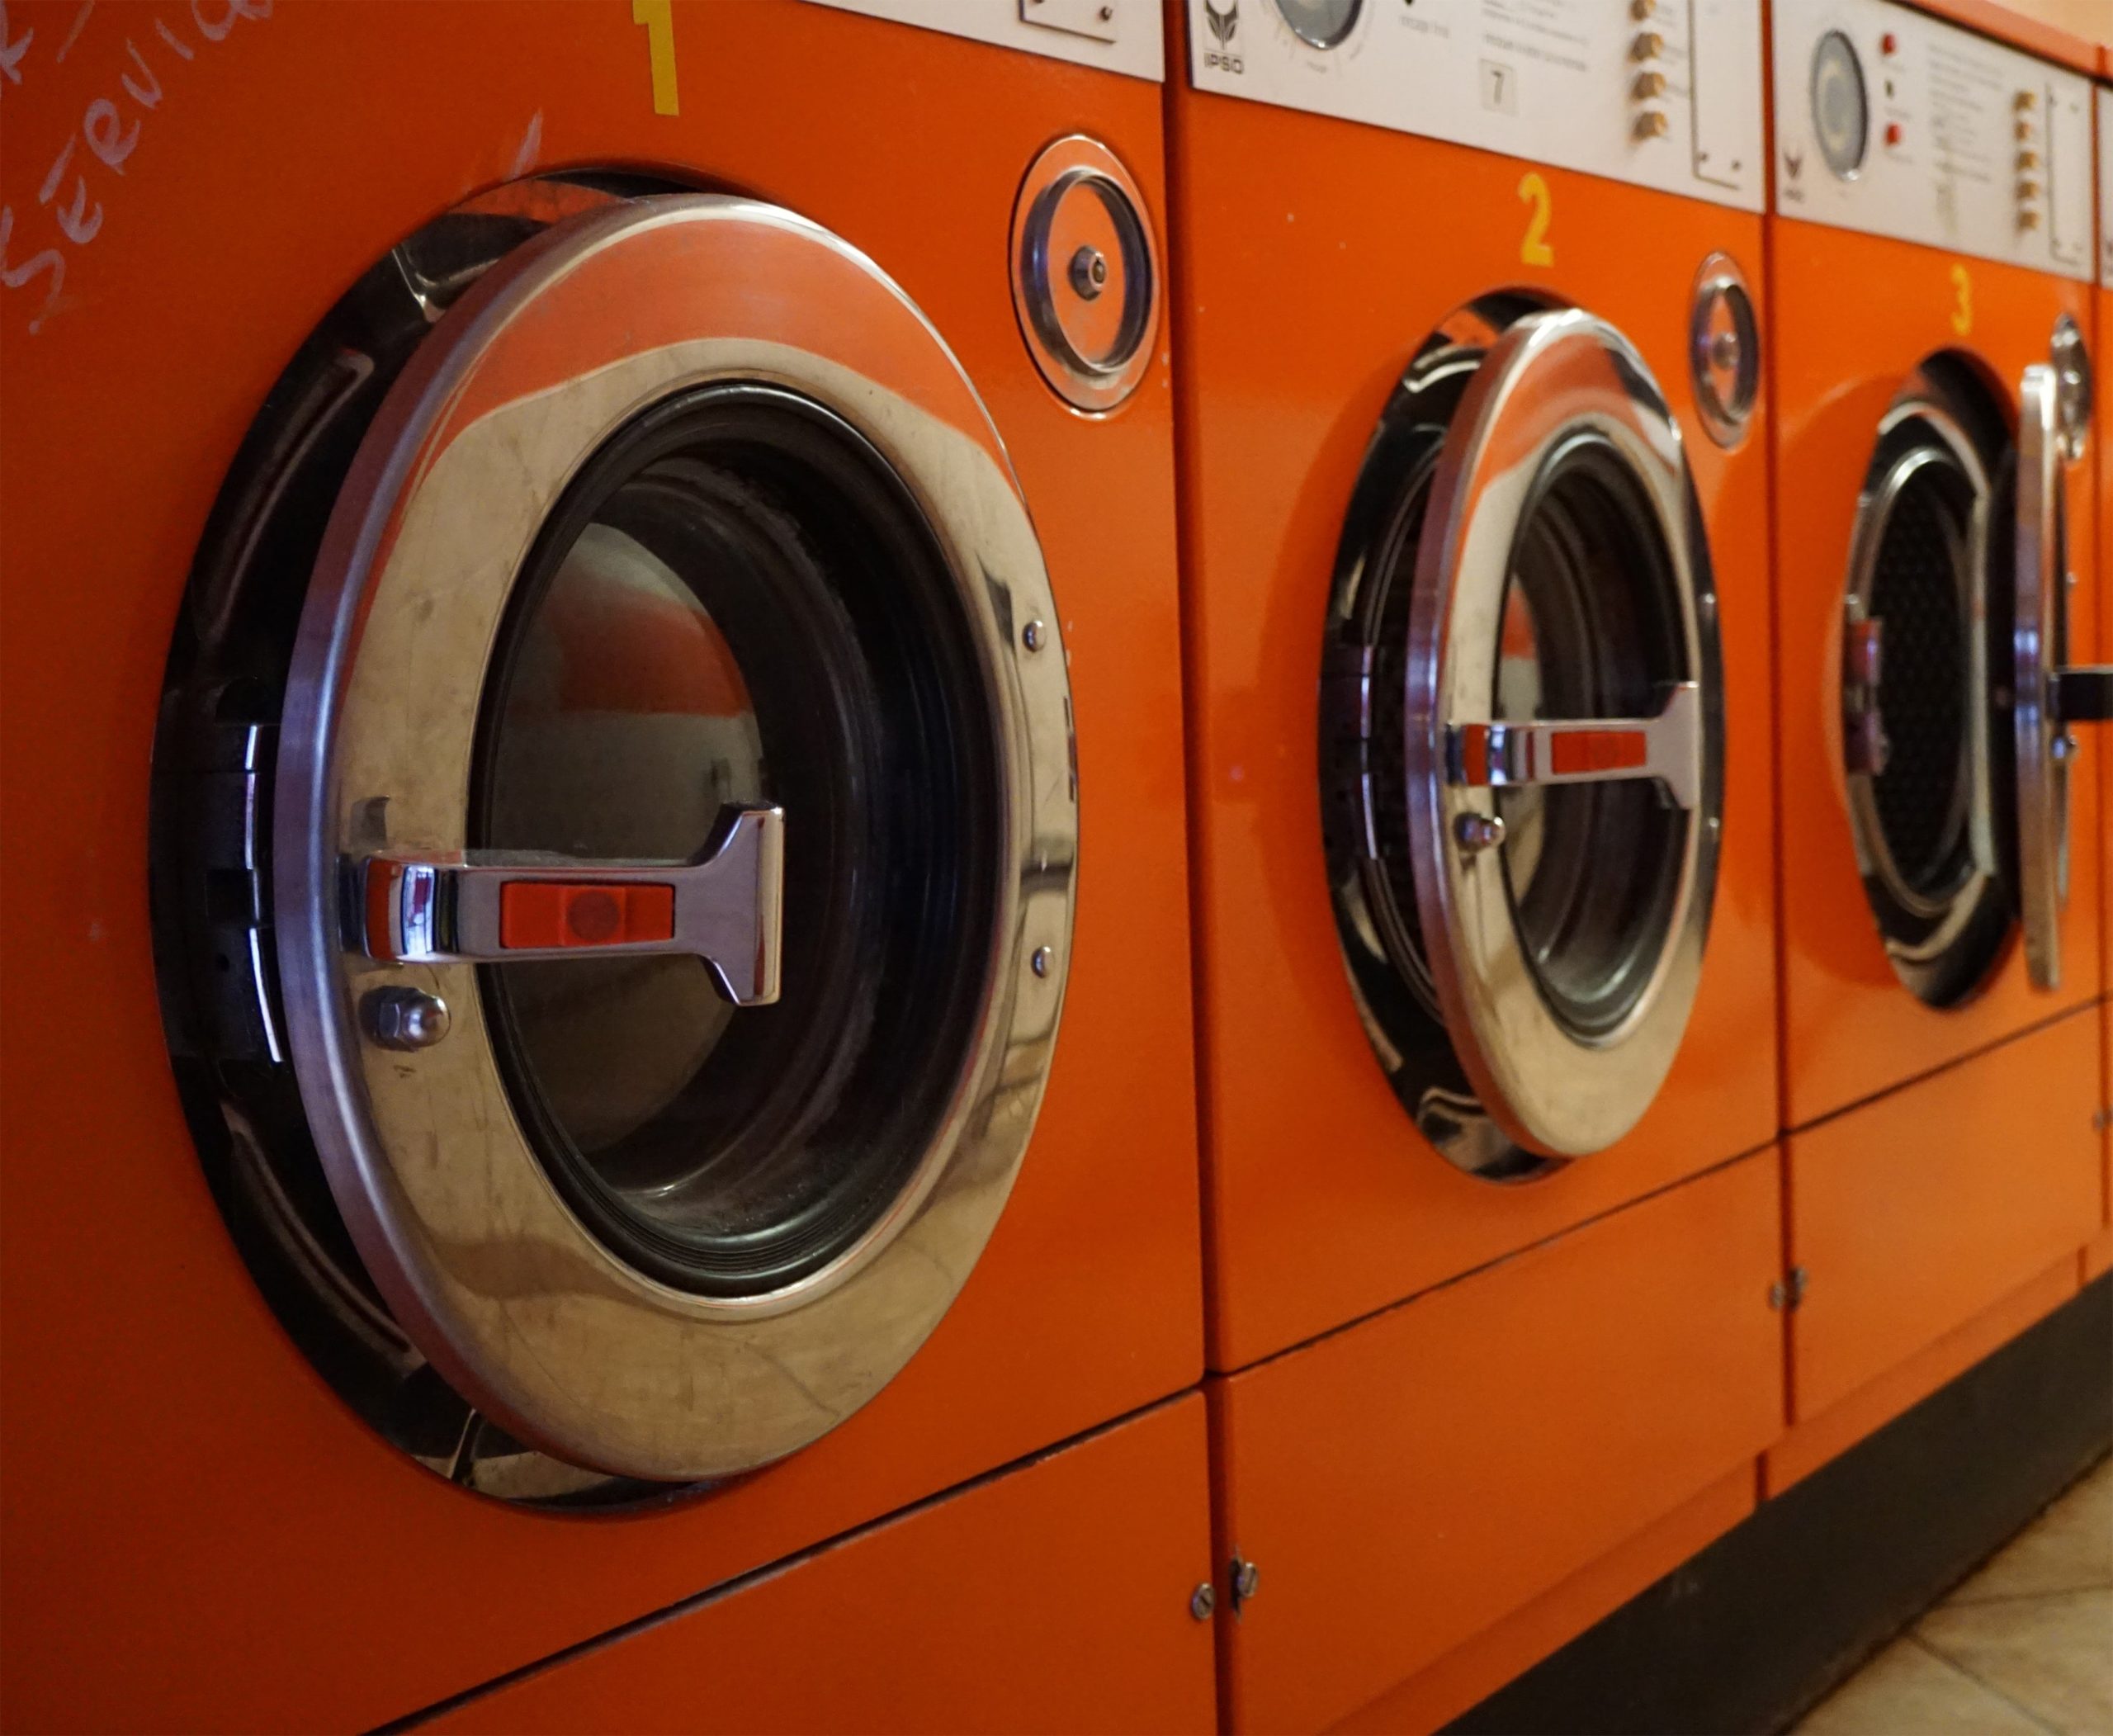 Orange washing machines in a row